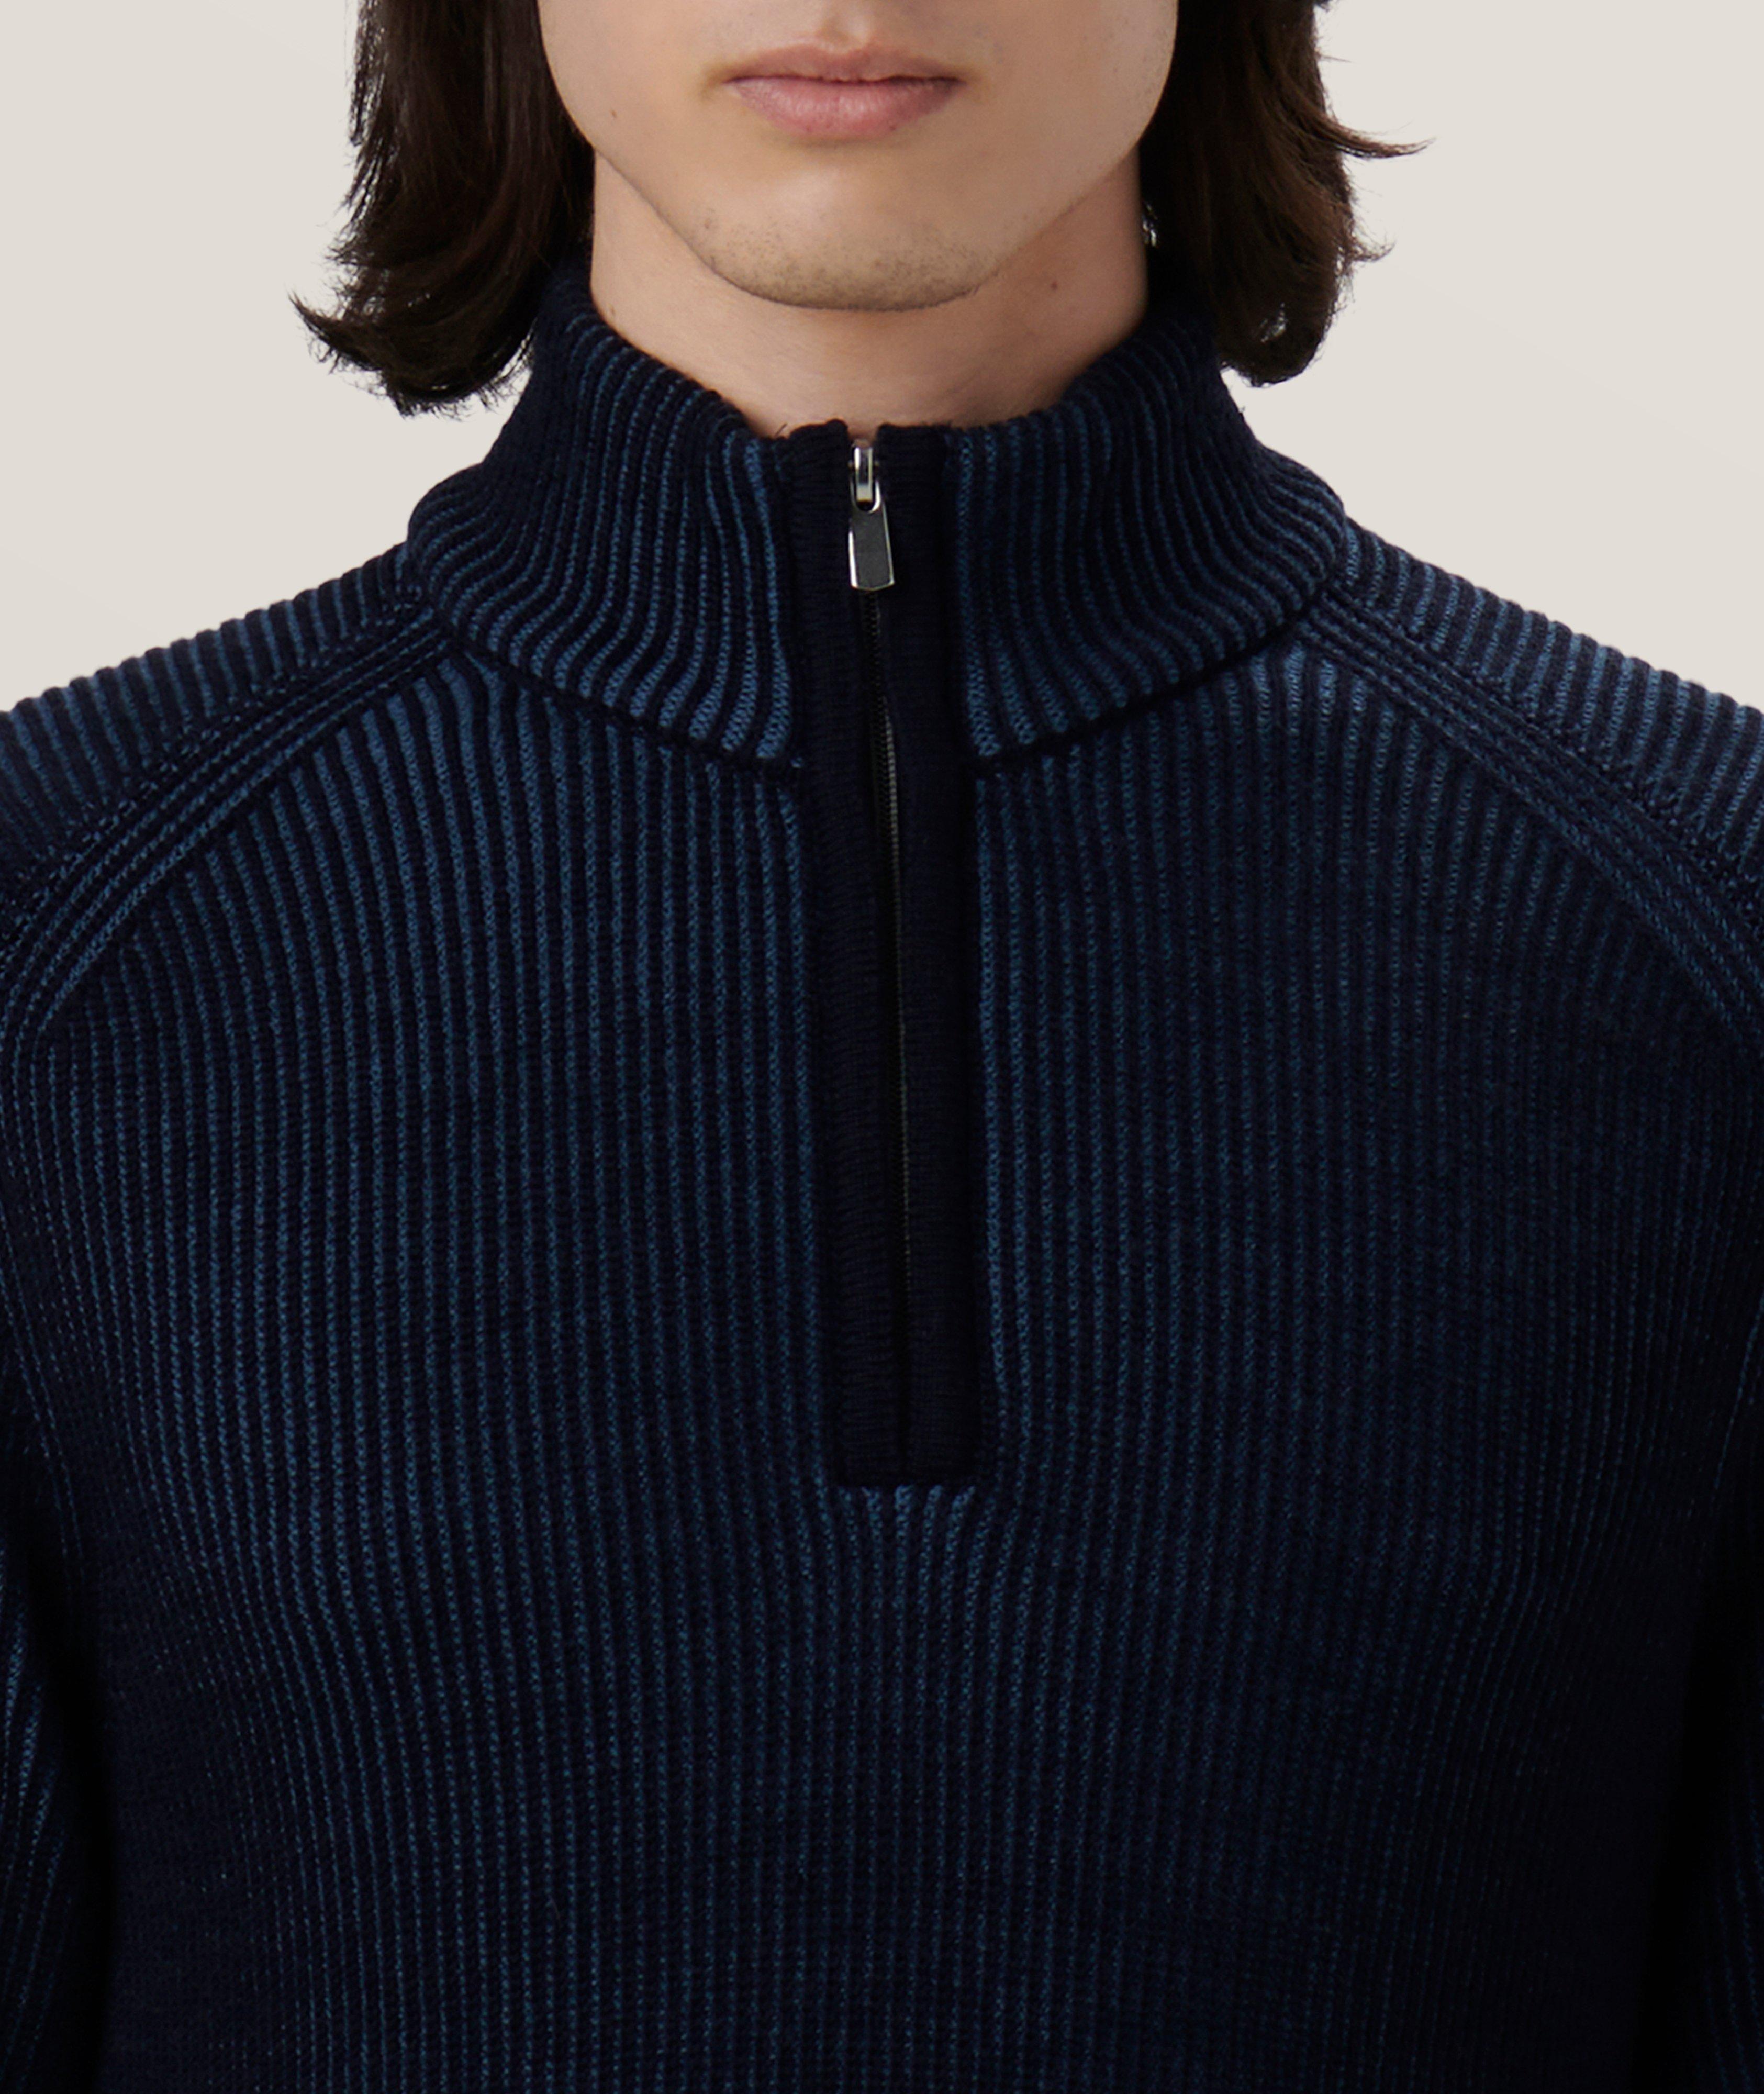 Cable Knit Merino Wool Quarter-Zip Sweater image 1